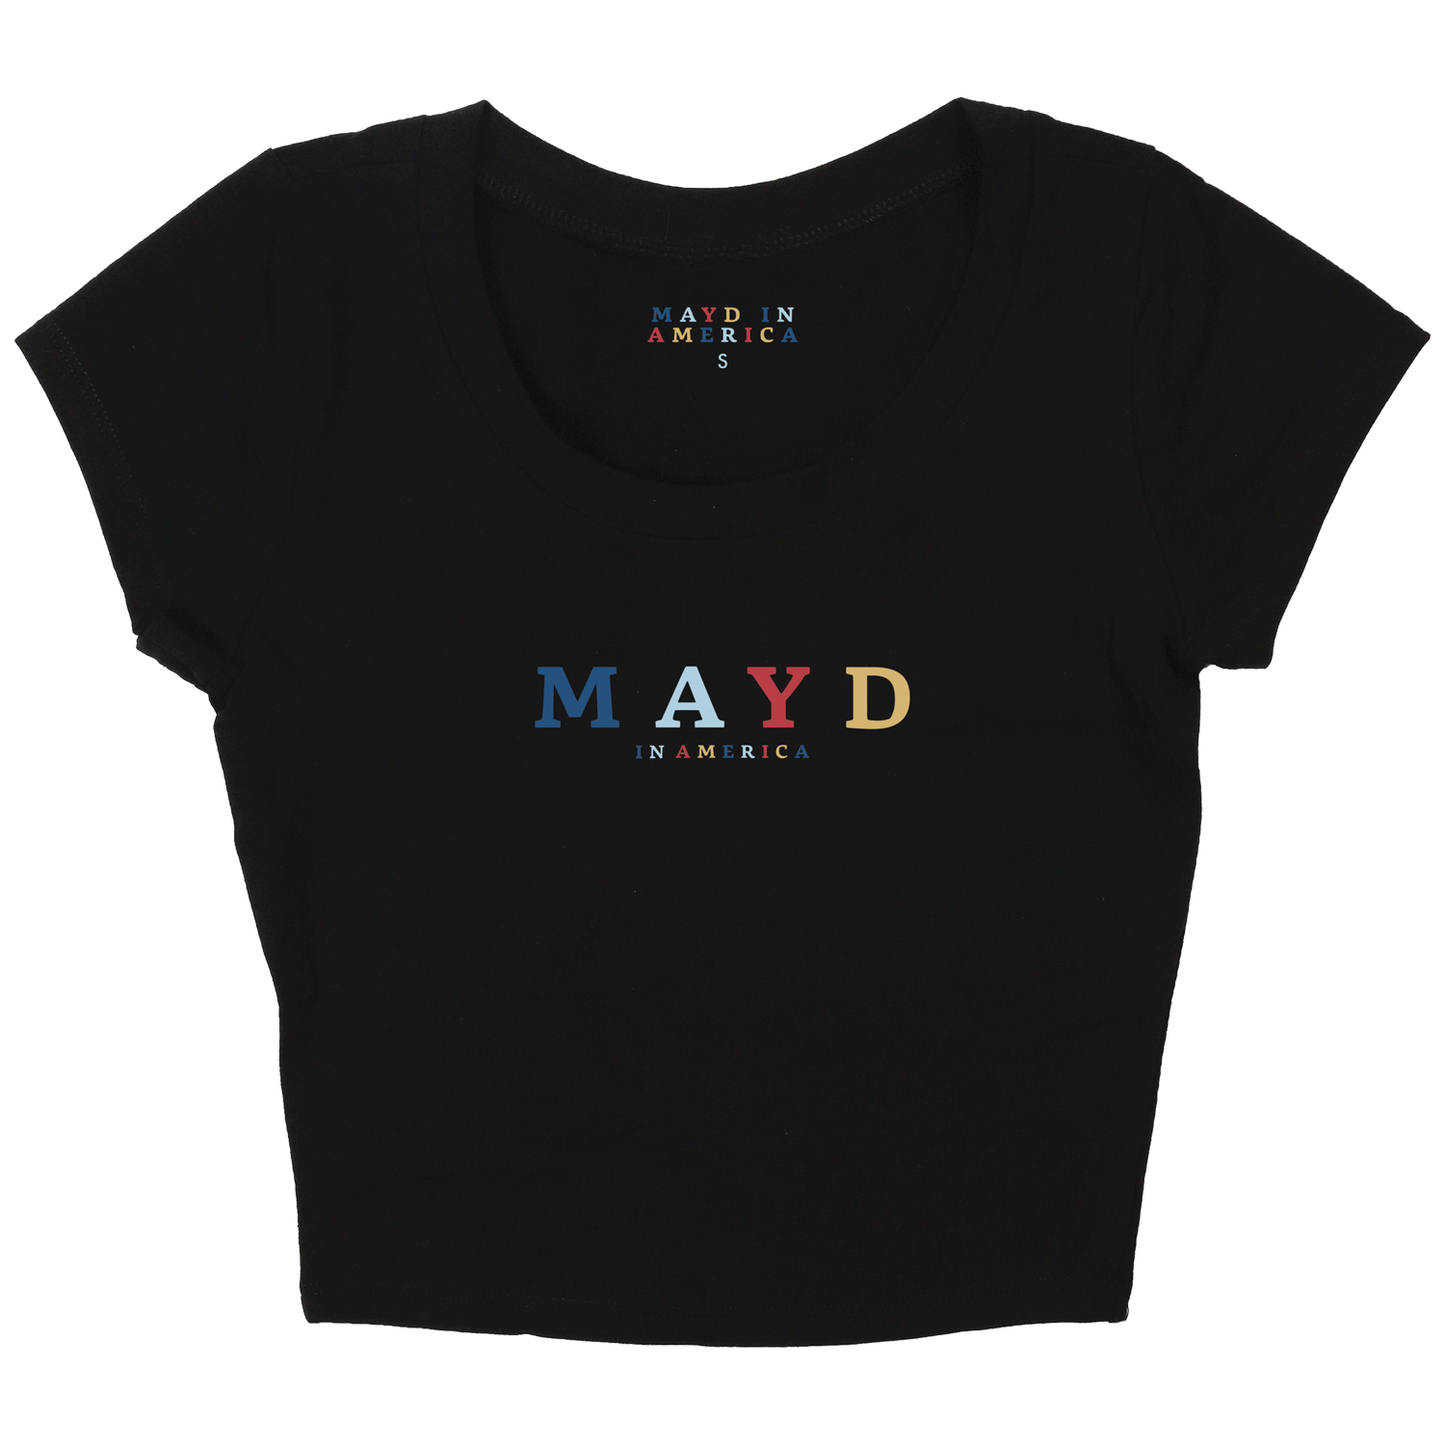 MAYD in America Crop Top T-shirt